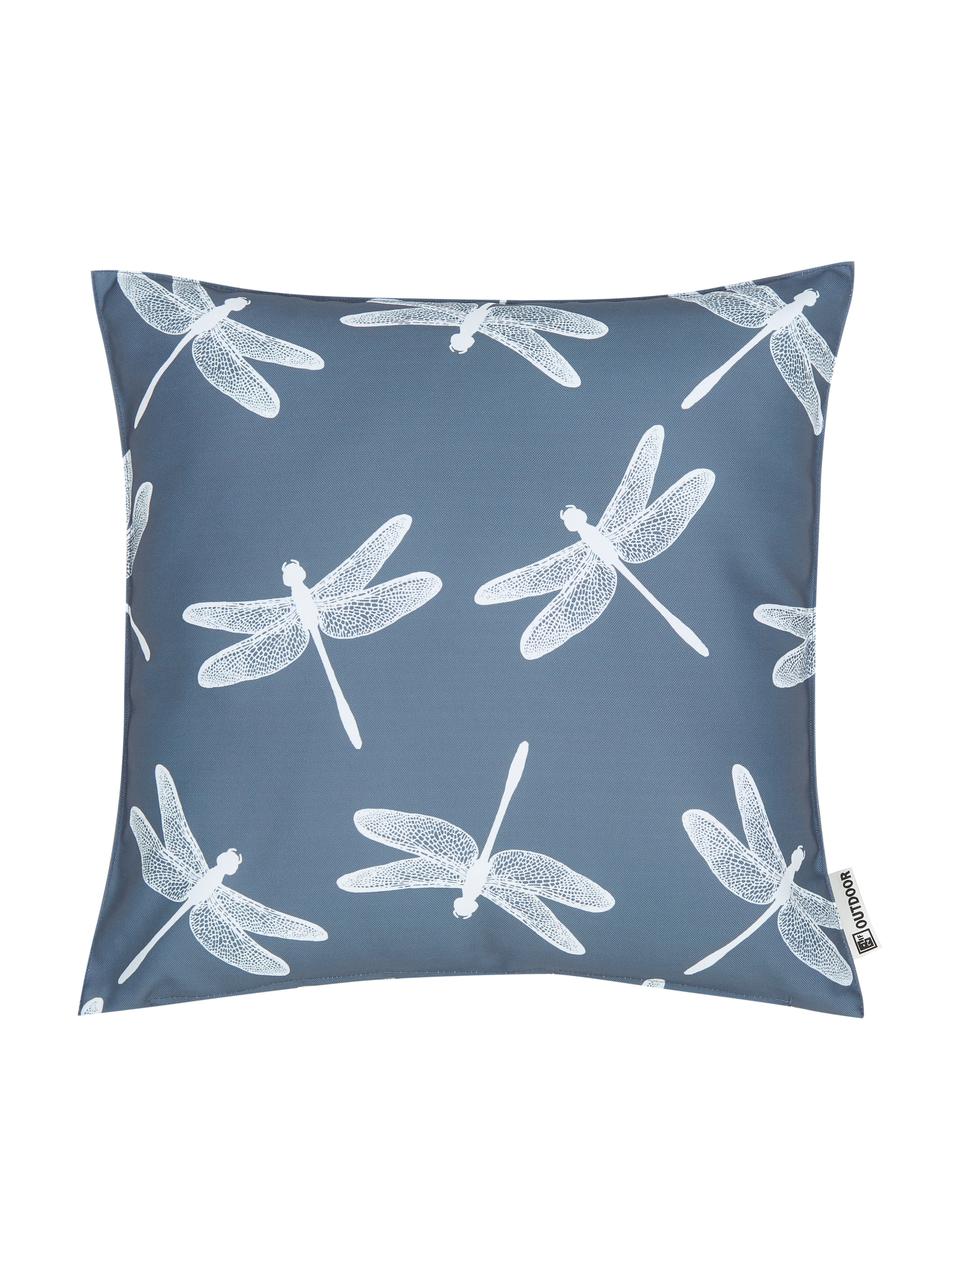 Outdoor-Kissen Dragonfly mit Libellenmotiven, 100% Polyester, Dunkelgrau, Weiß, 47 x 47 cm